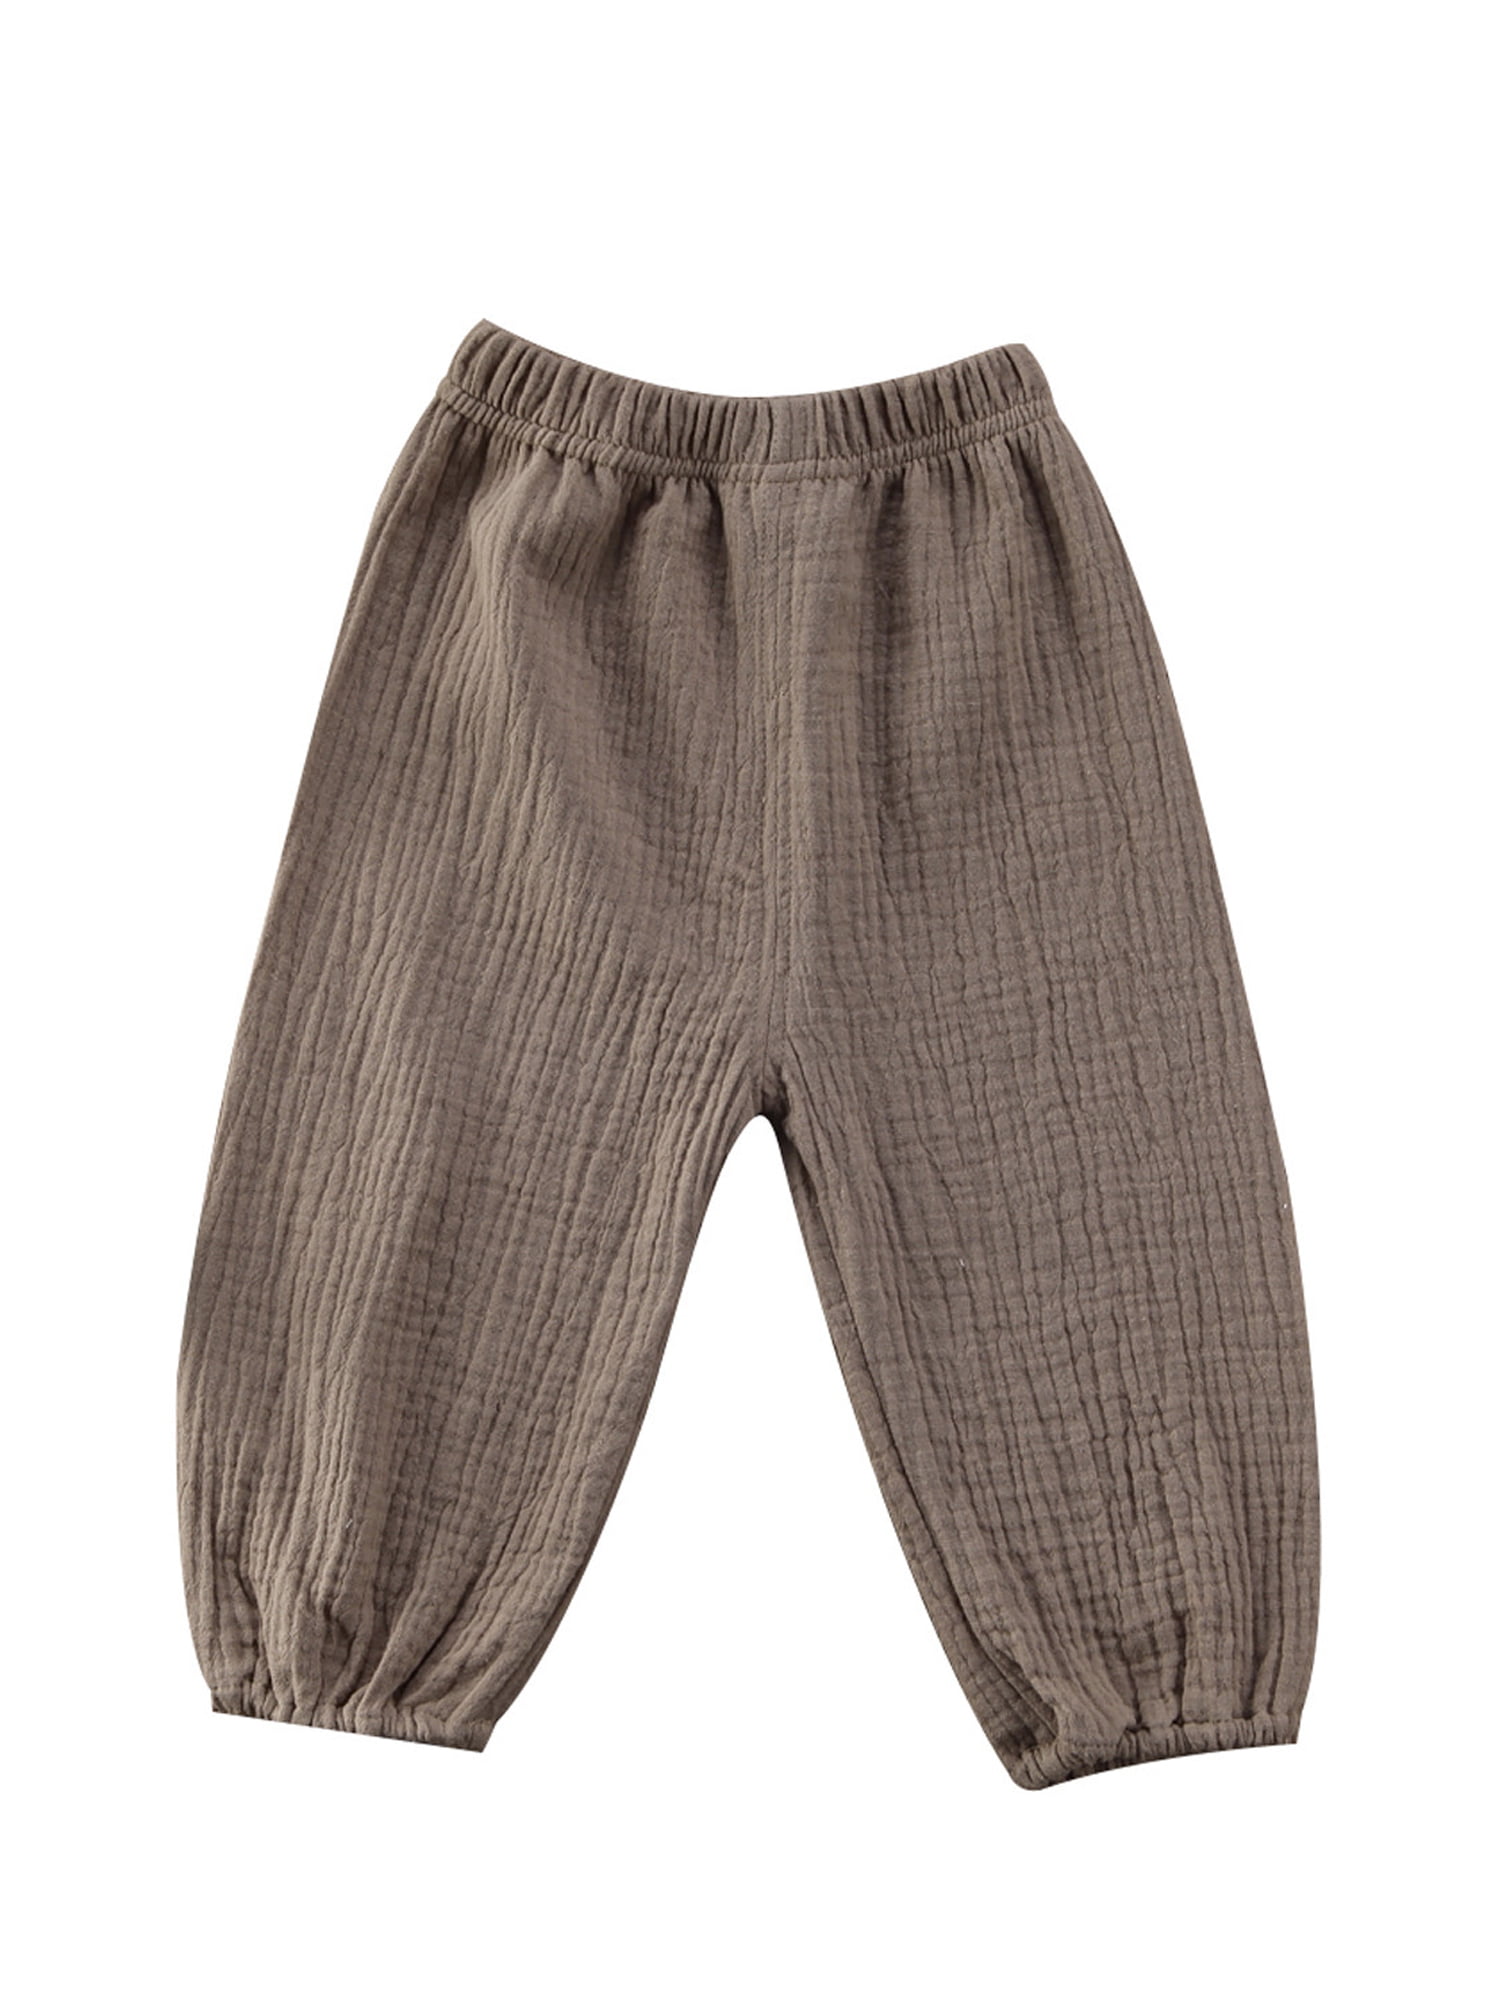 0-5T Kid Toddler Child Boy Girl Cotton Linen Pants Elastic Waist Harem Trousers 